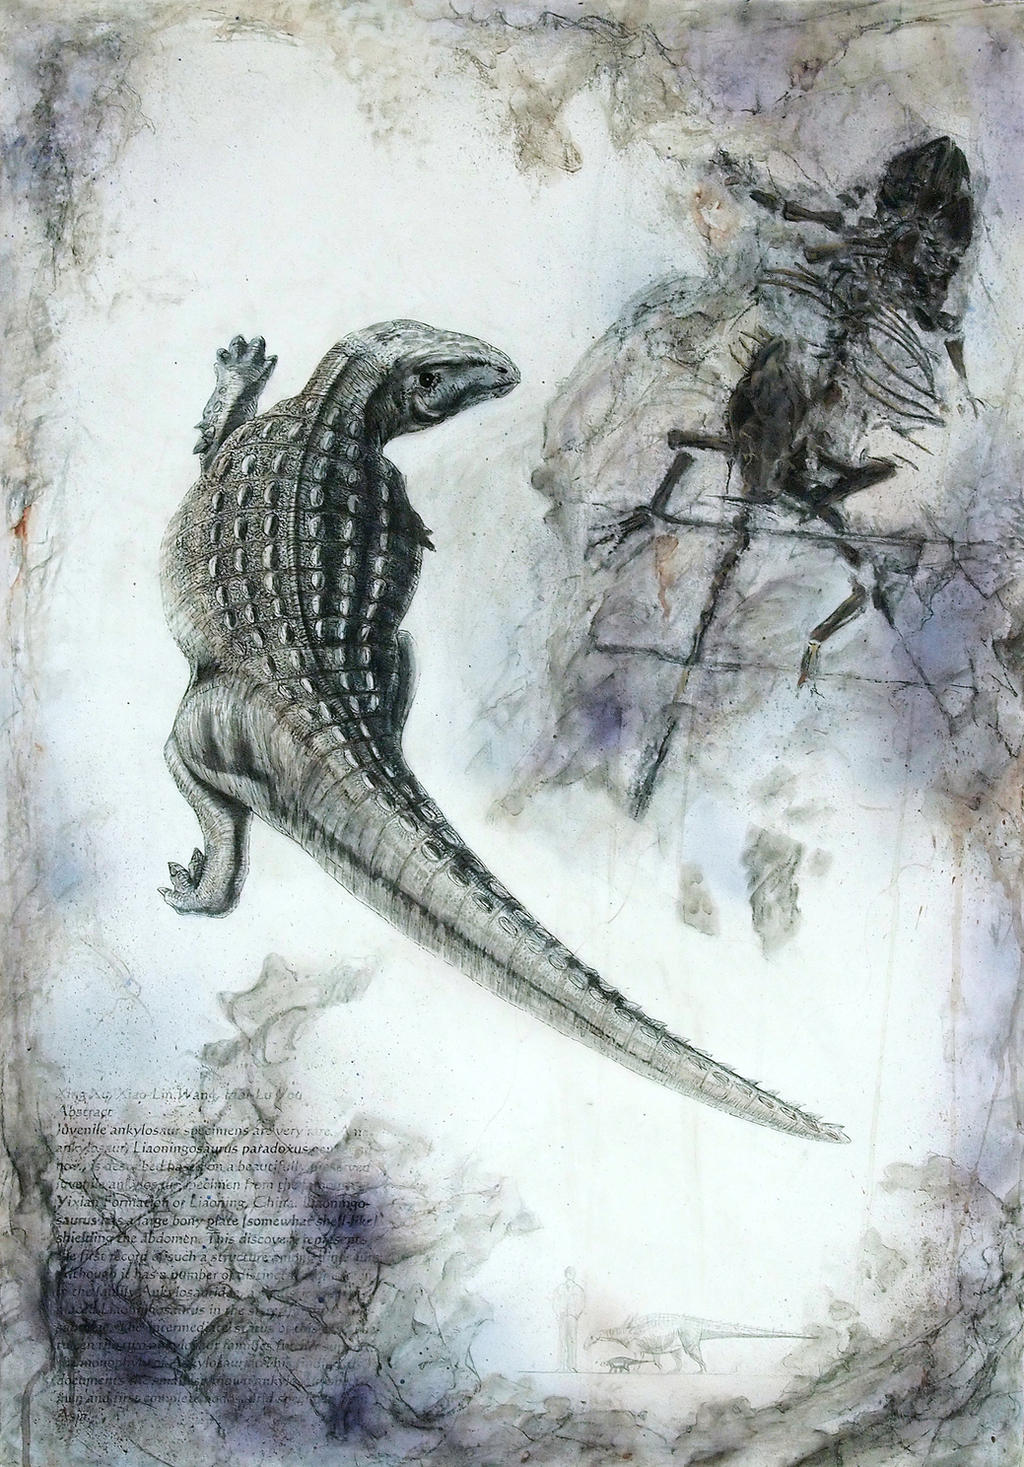 jehol_biota__liaoningosaurus_paradoxus_by_cheungchungtat-d5zc4lq.jpg